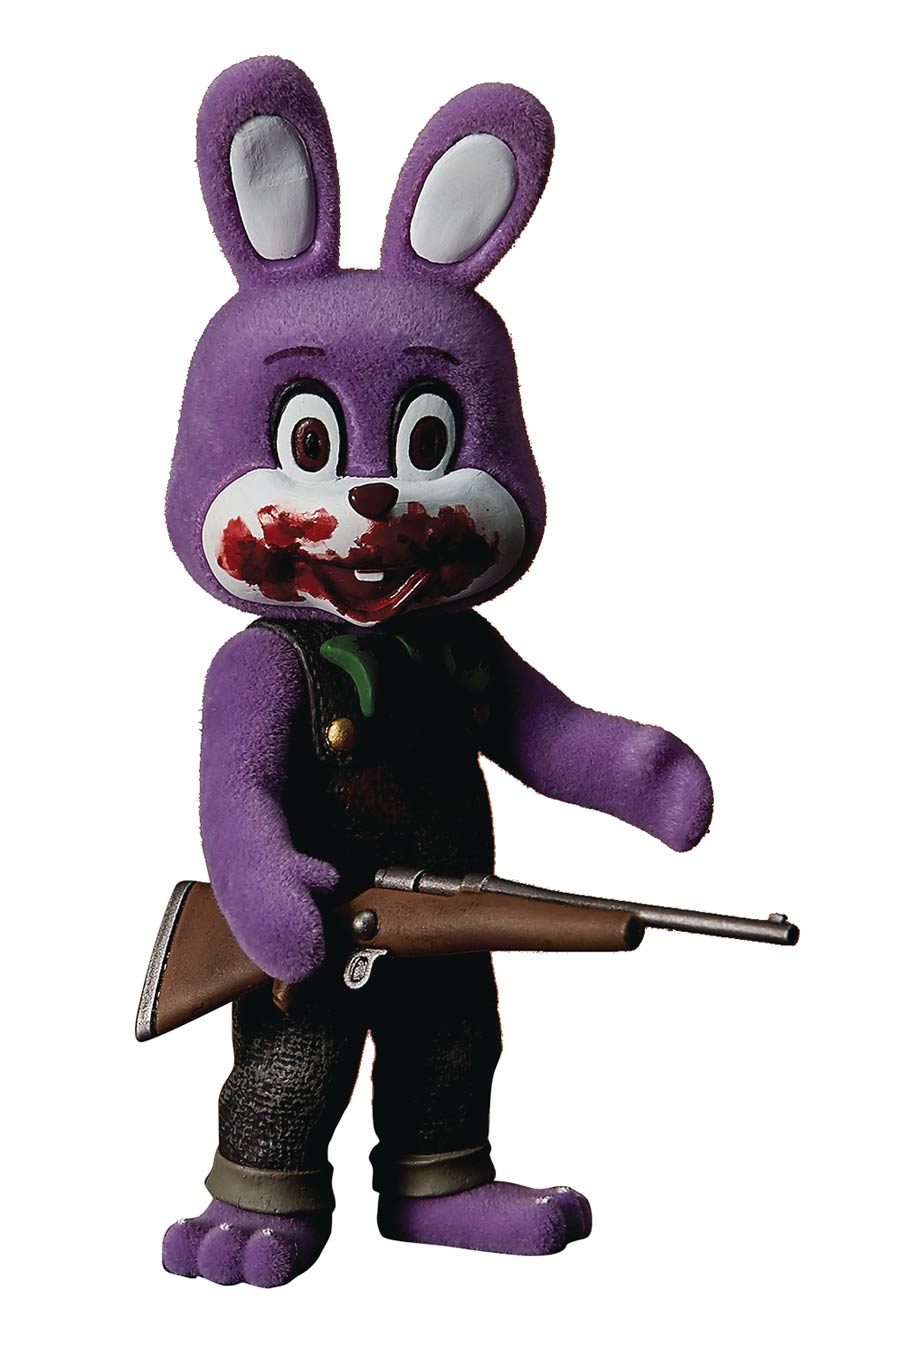 Silent Hill 3 Robbie The Rabbit Mini Figure - Purple Version